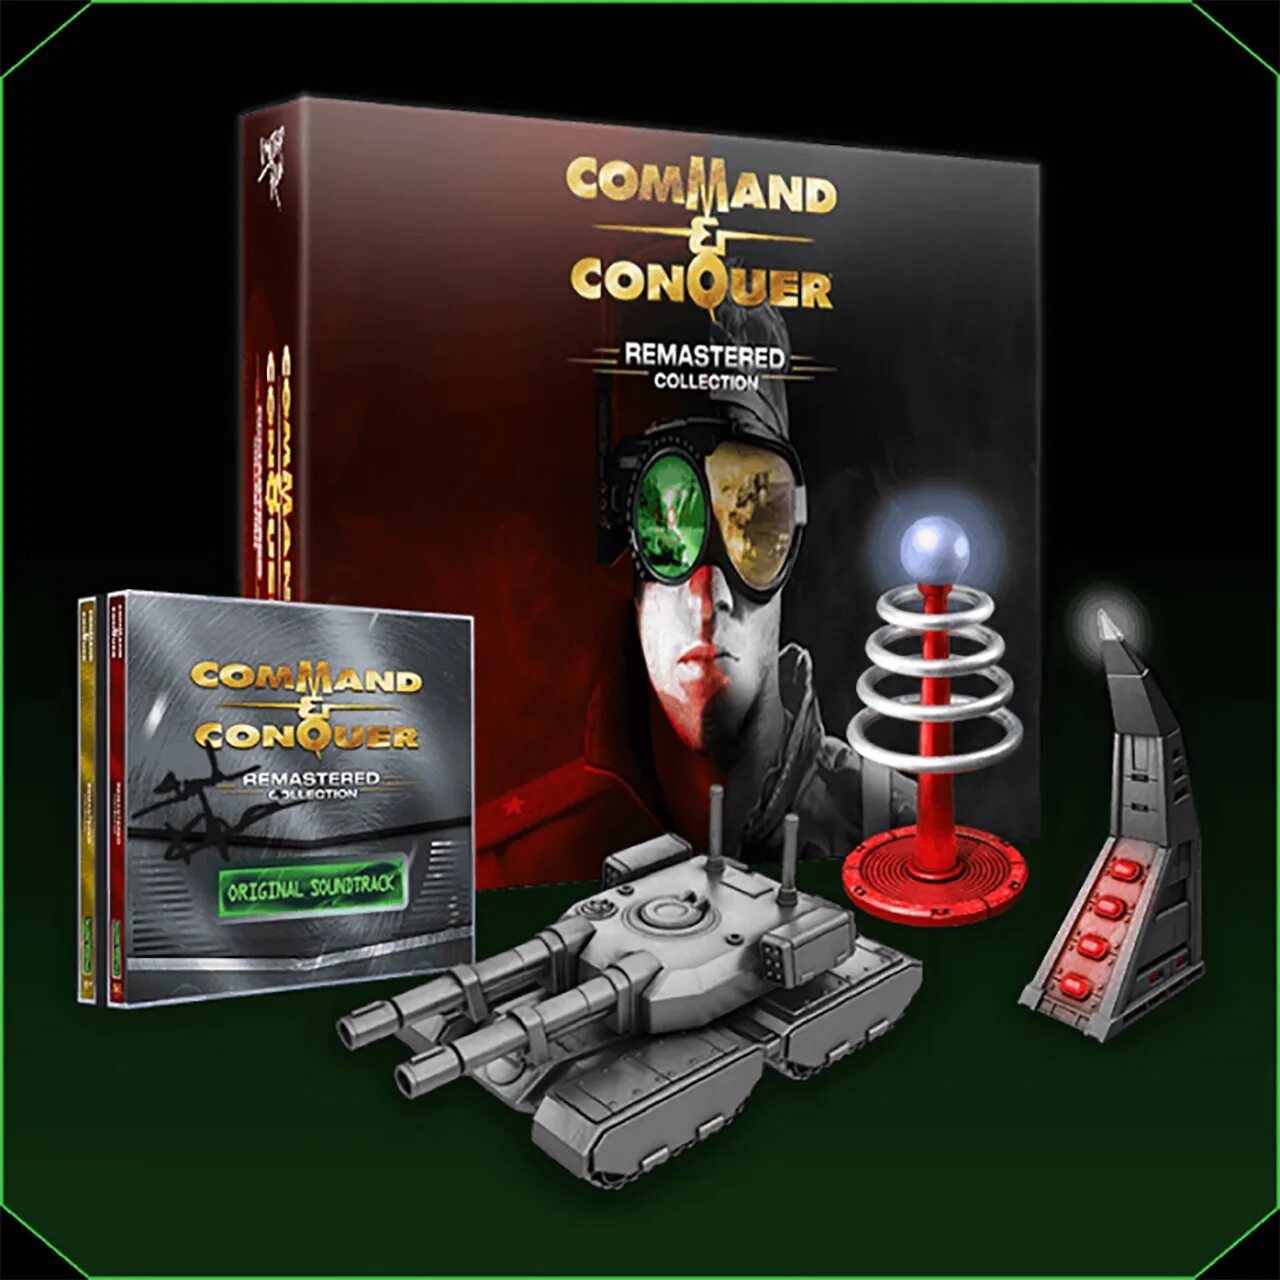 Command and Conquer коллекционное издание. Command and Conquer Remastered collection коллекционное издание. Command Conquer 1 коллекционное издание. Red Alert 3 коллекционное издание.